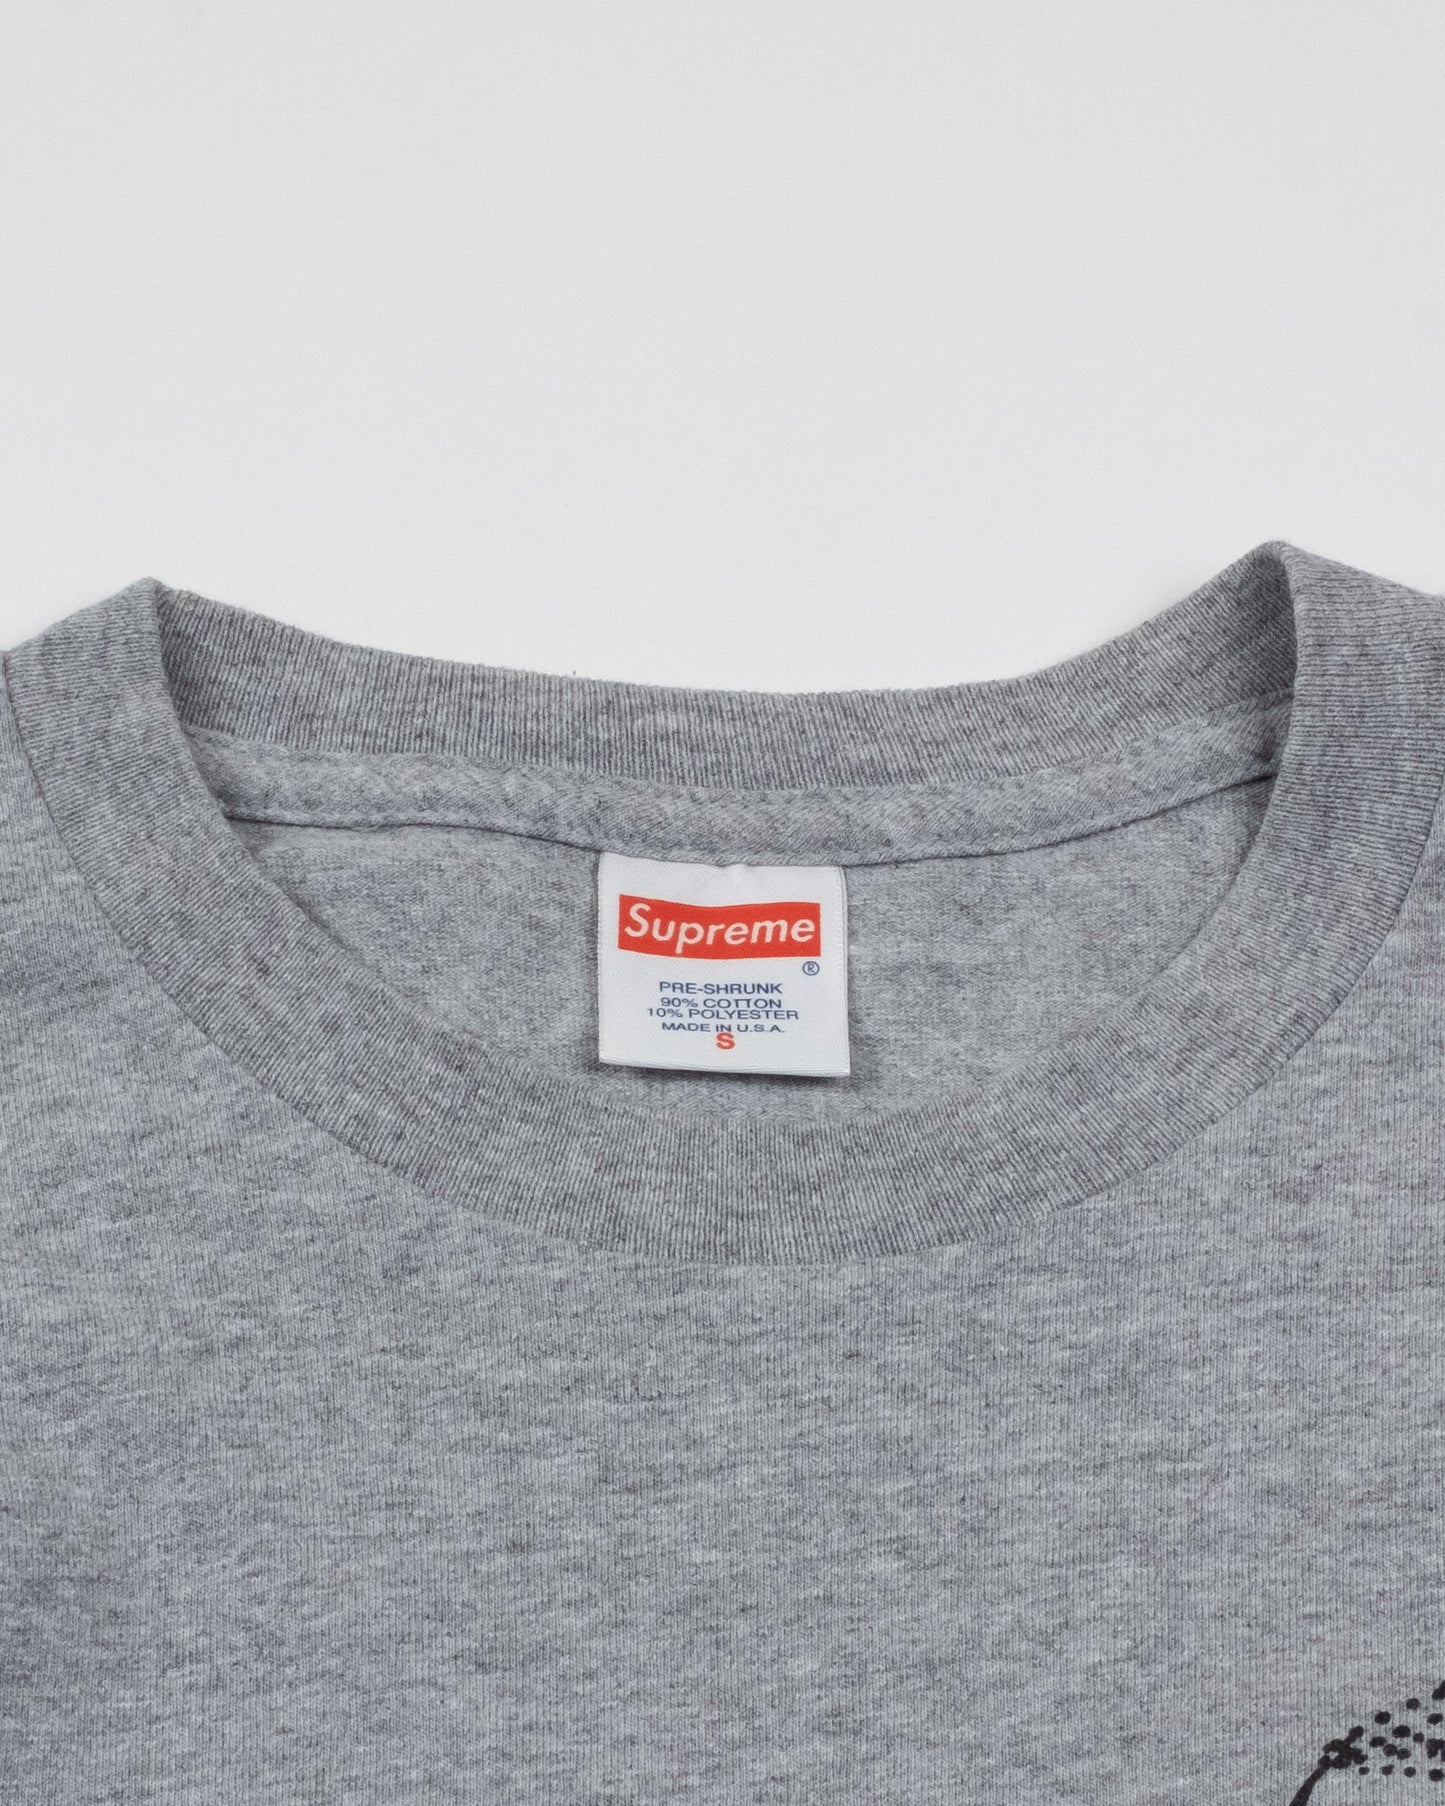 2014 Supreme x KRS One Grey T-Shirt